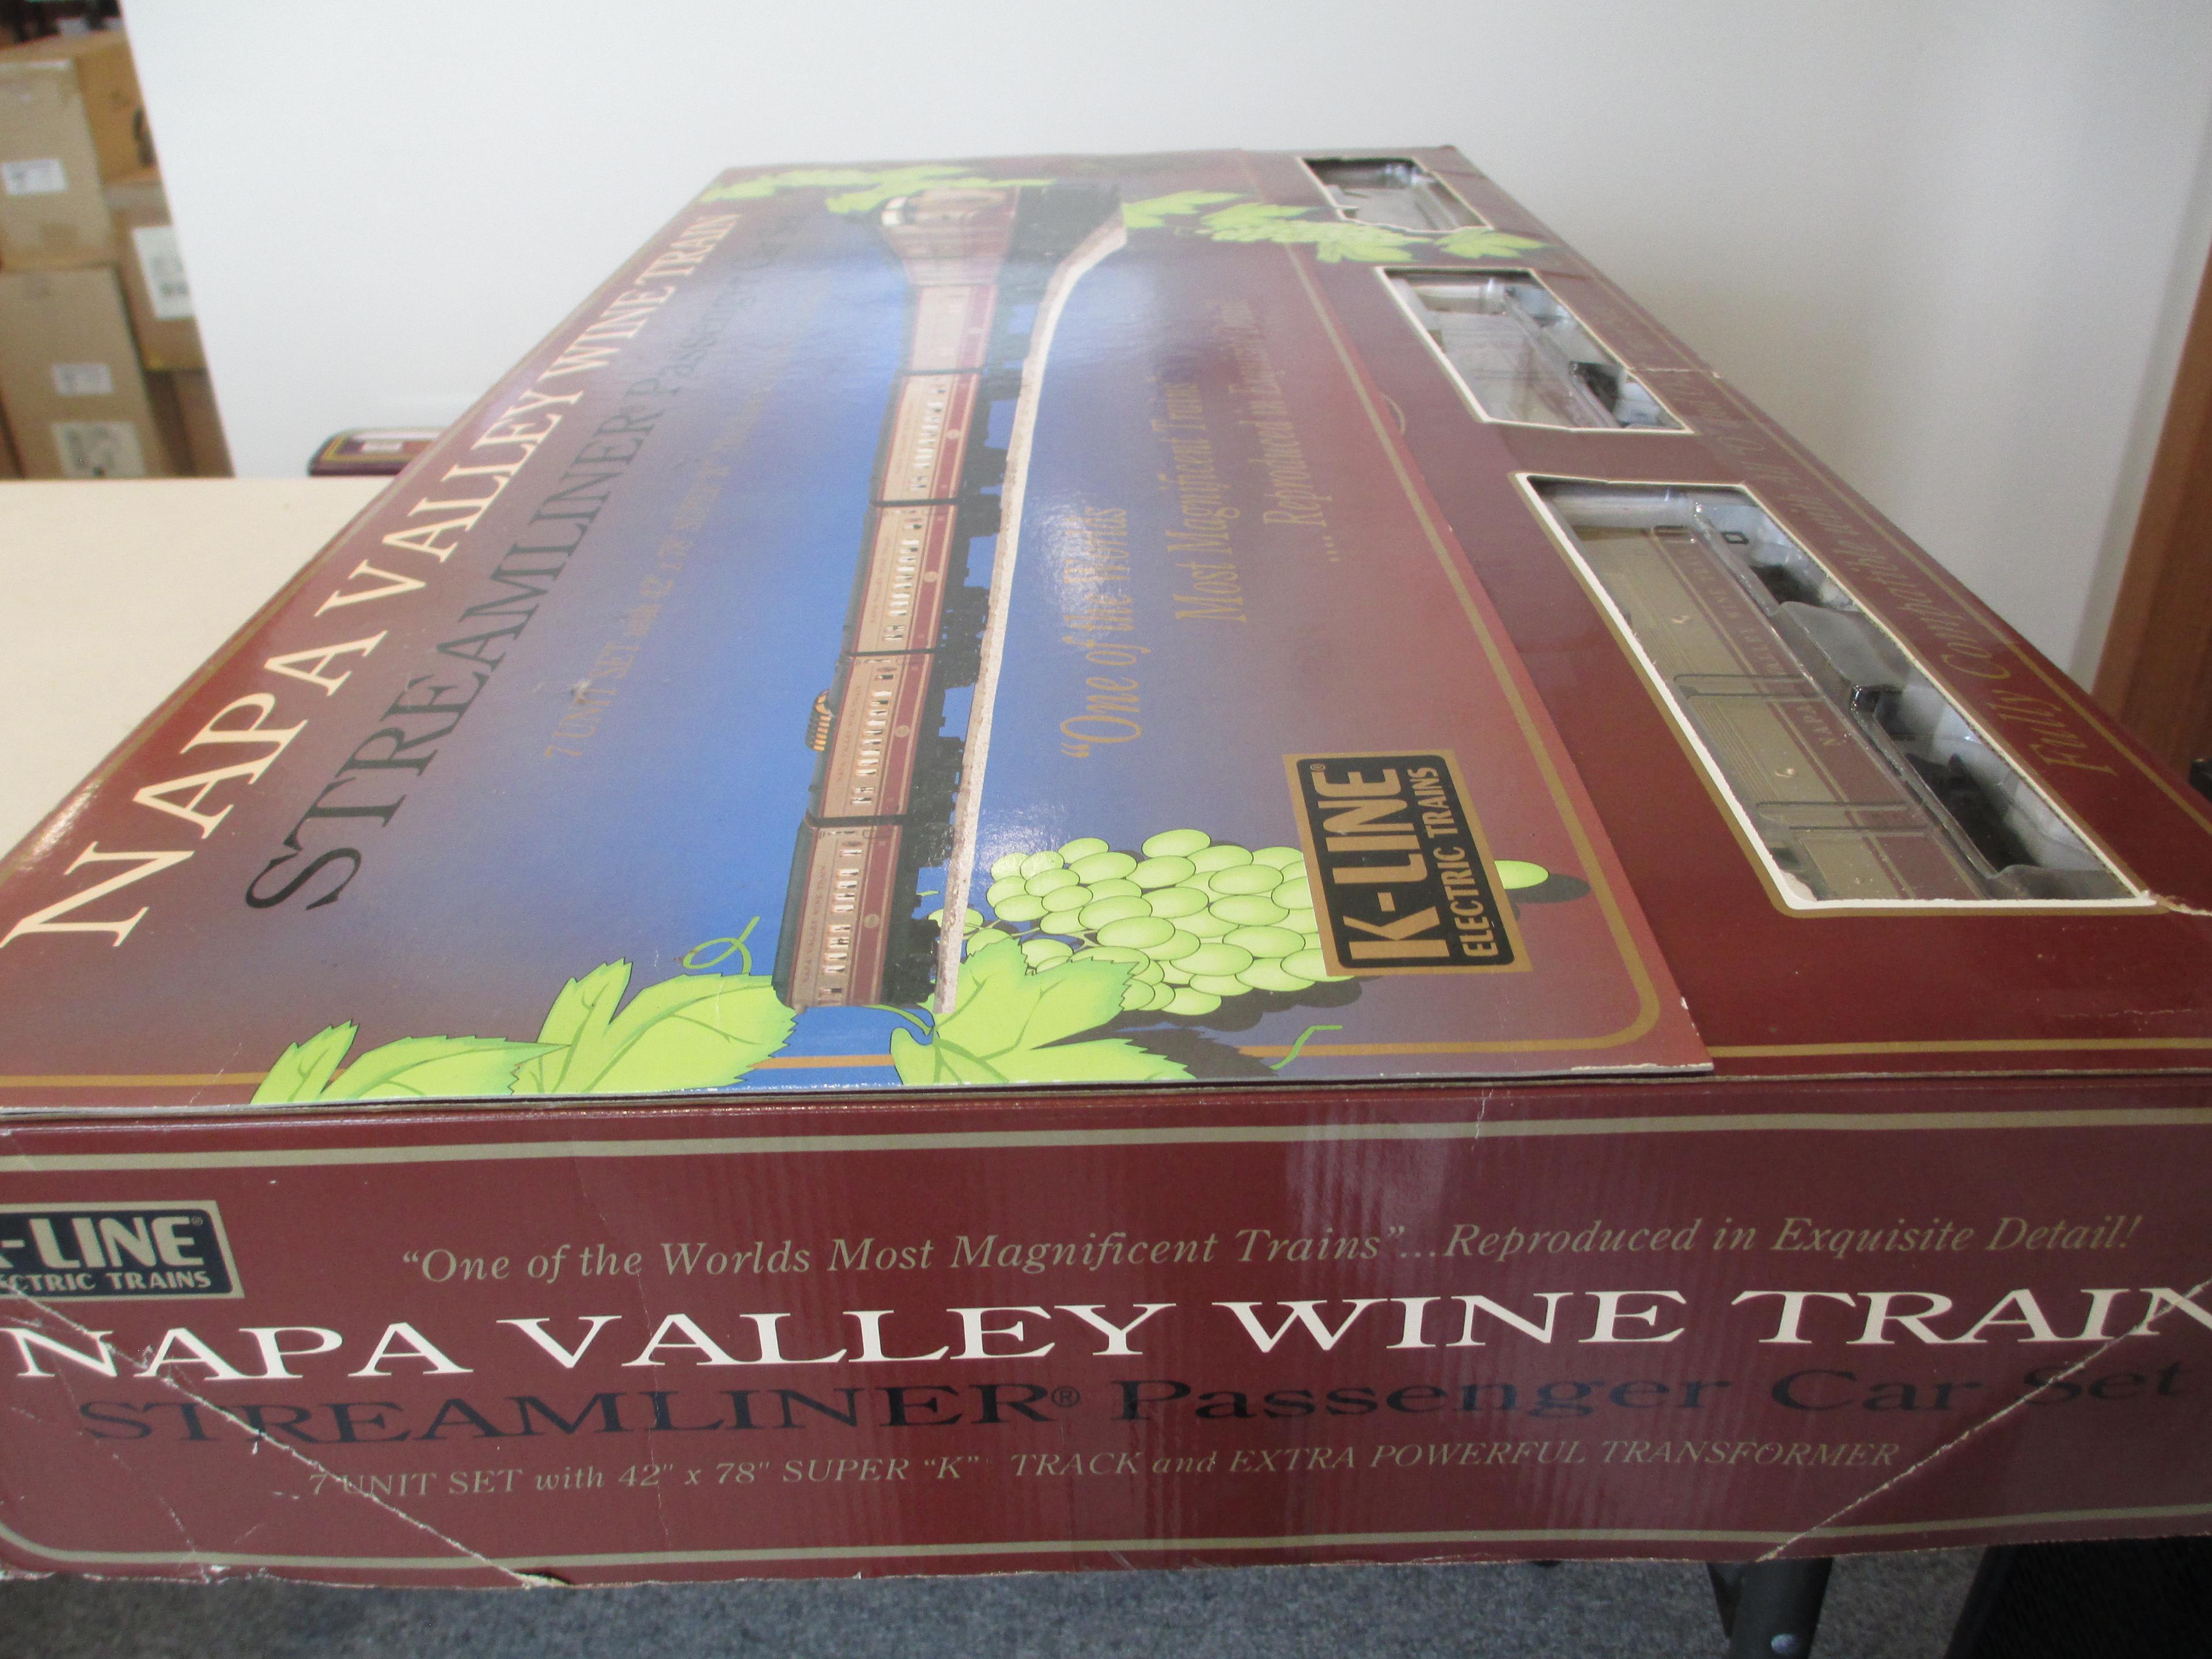 K-Line Electric Trains Napa Valley Wine Train Streamliner Passanger Car Set